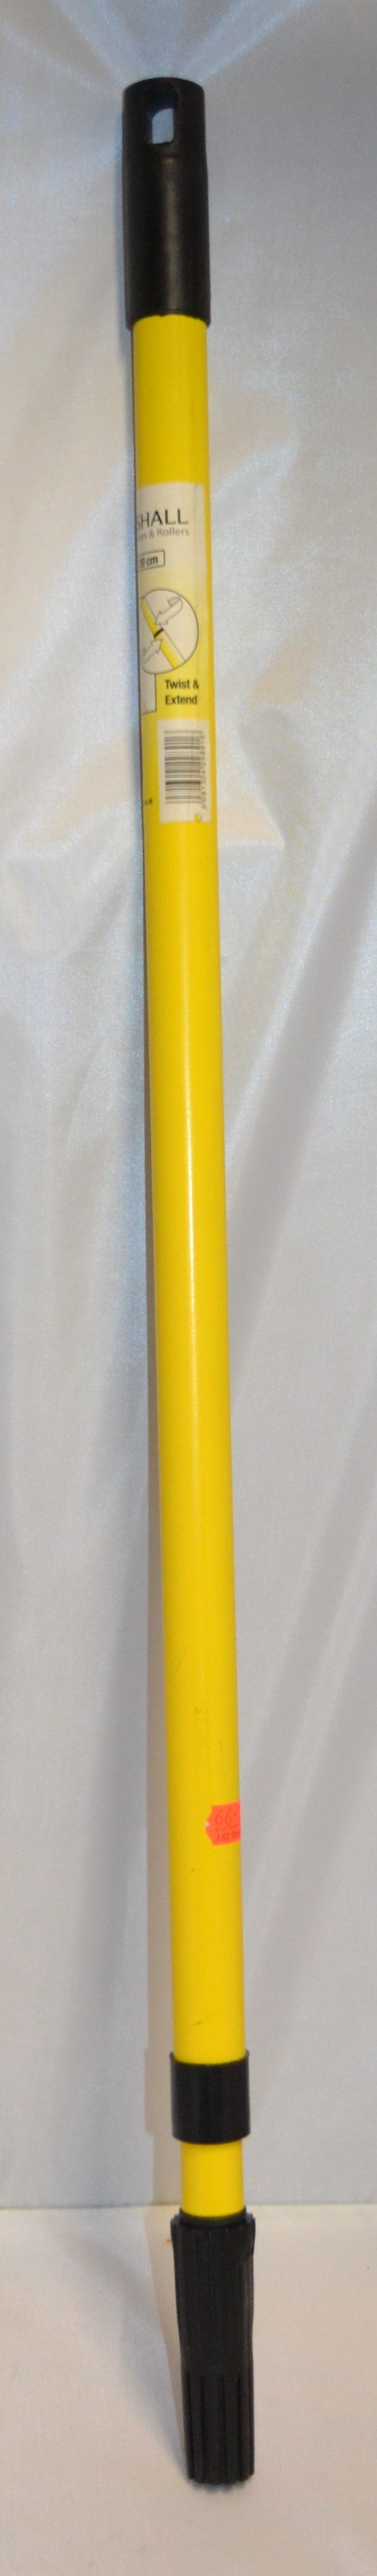 Marshall - Twist & Extend Steel Extension Pole - 60cm-120cm & 110-200cm